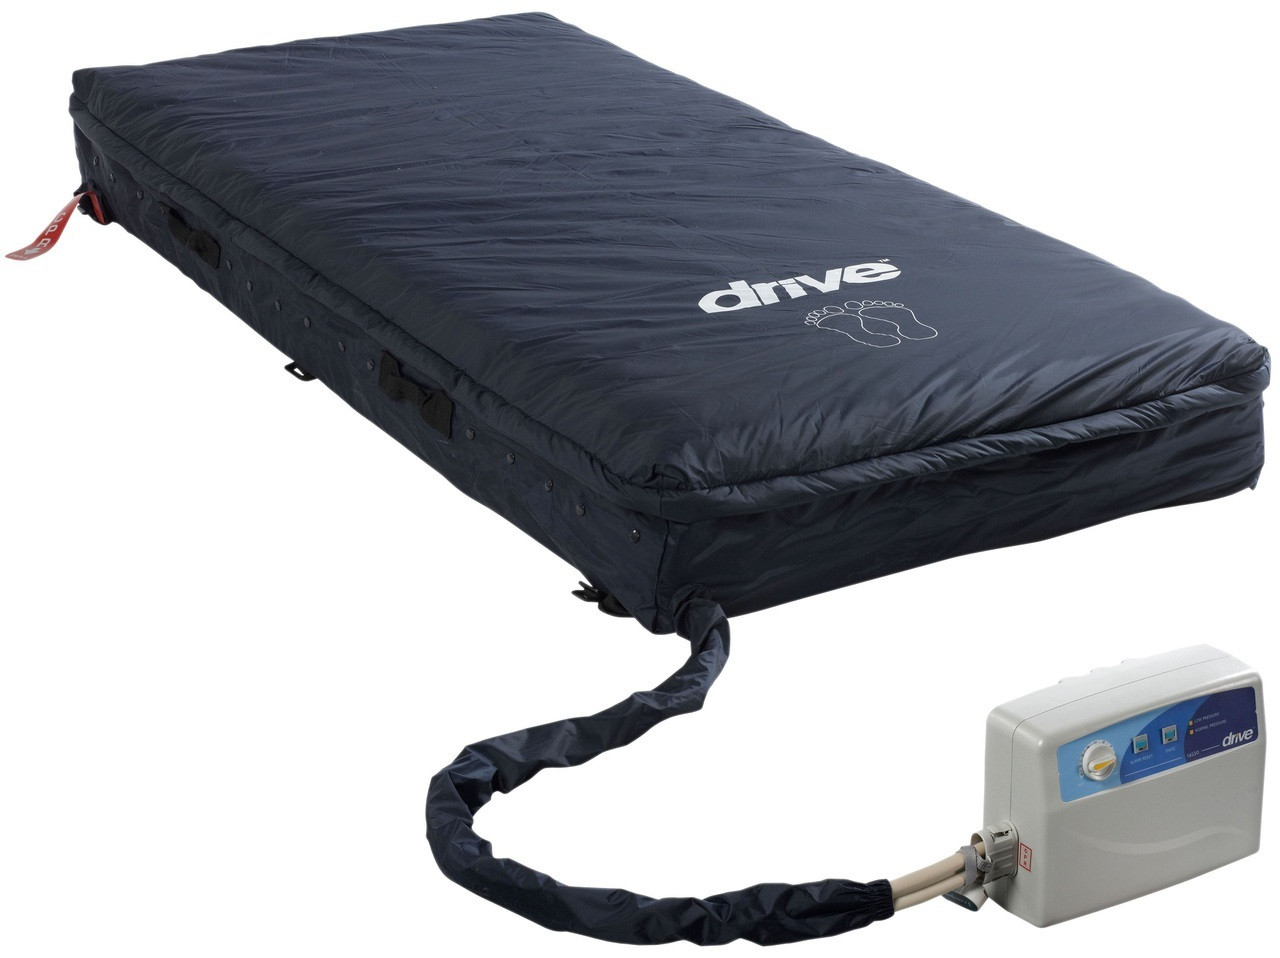 med-aire alternating pressure mattress